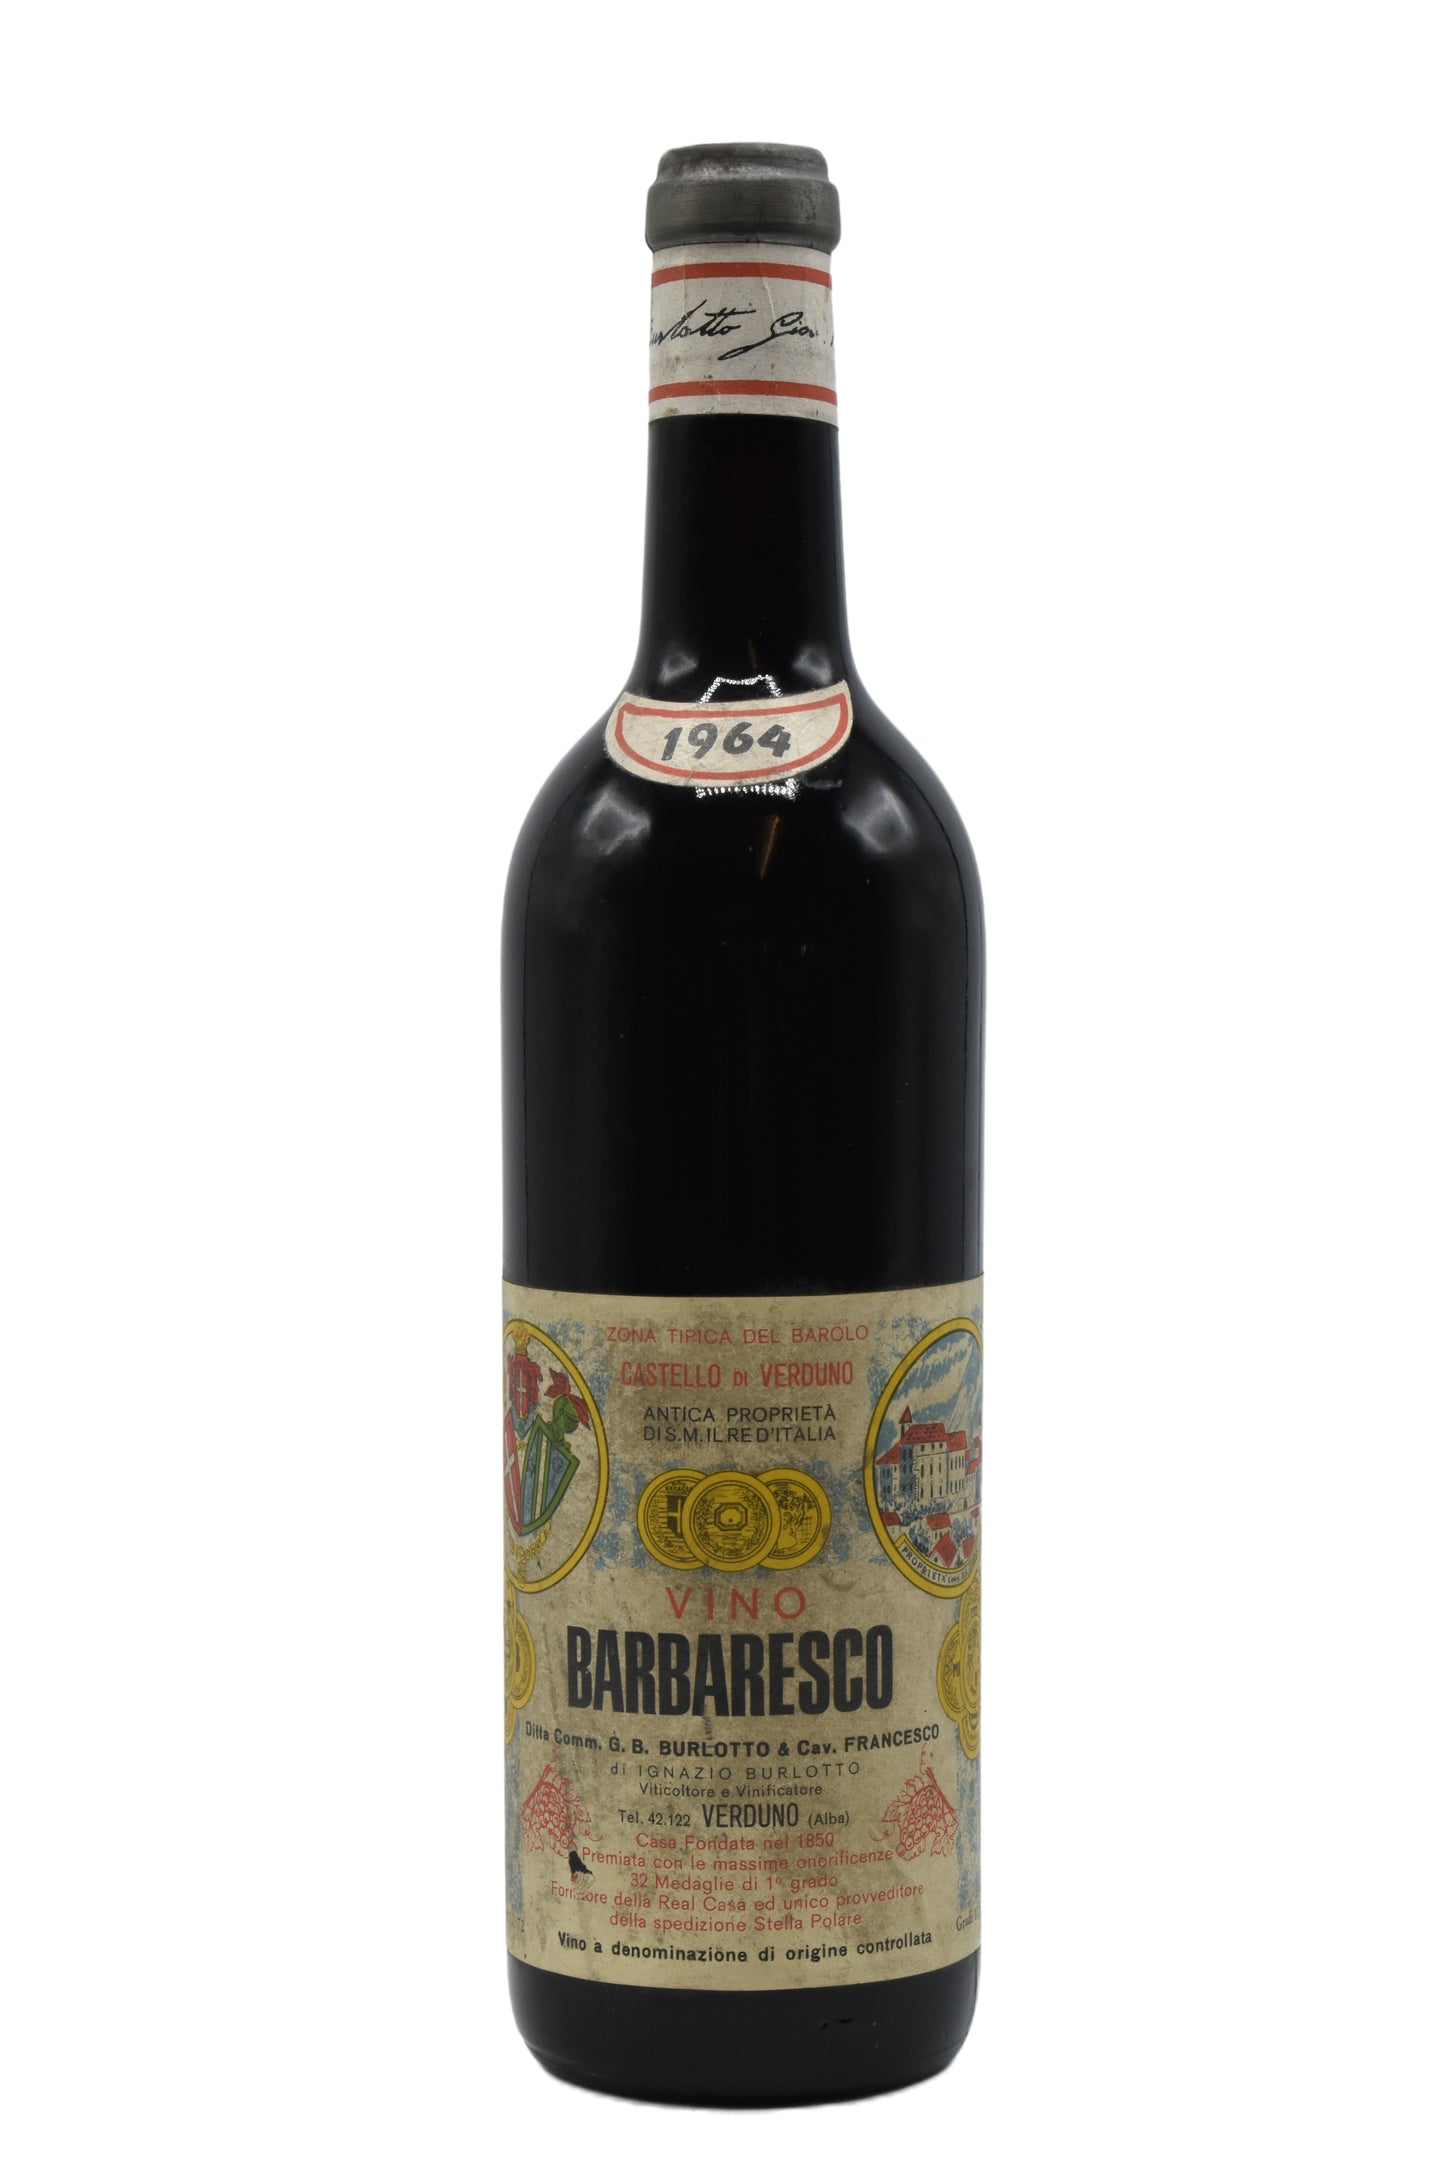 1964 Comm. G.B. Burlotto, Barbaresco 750ml - Walker Wine Co.